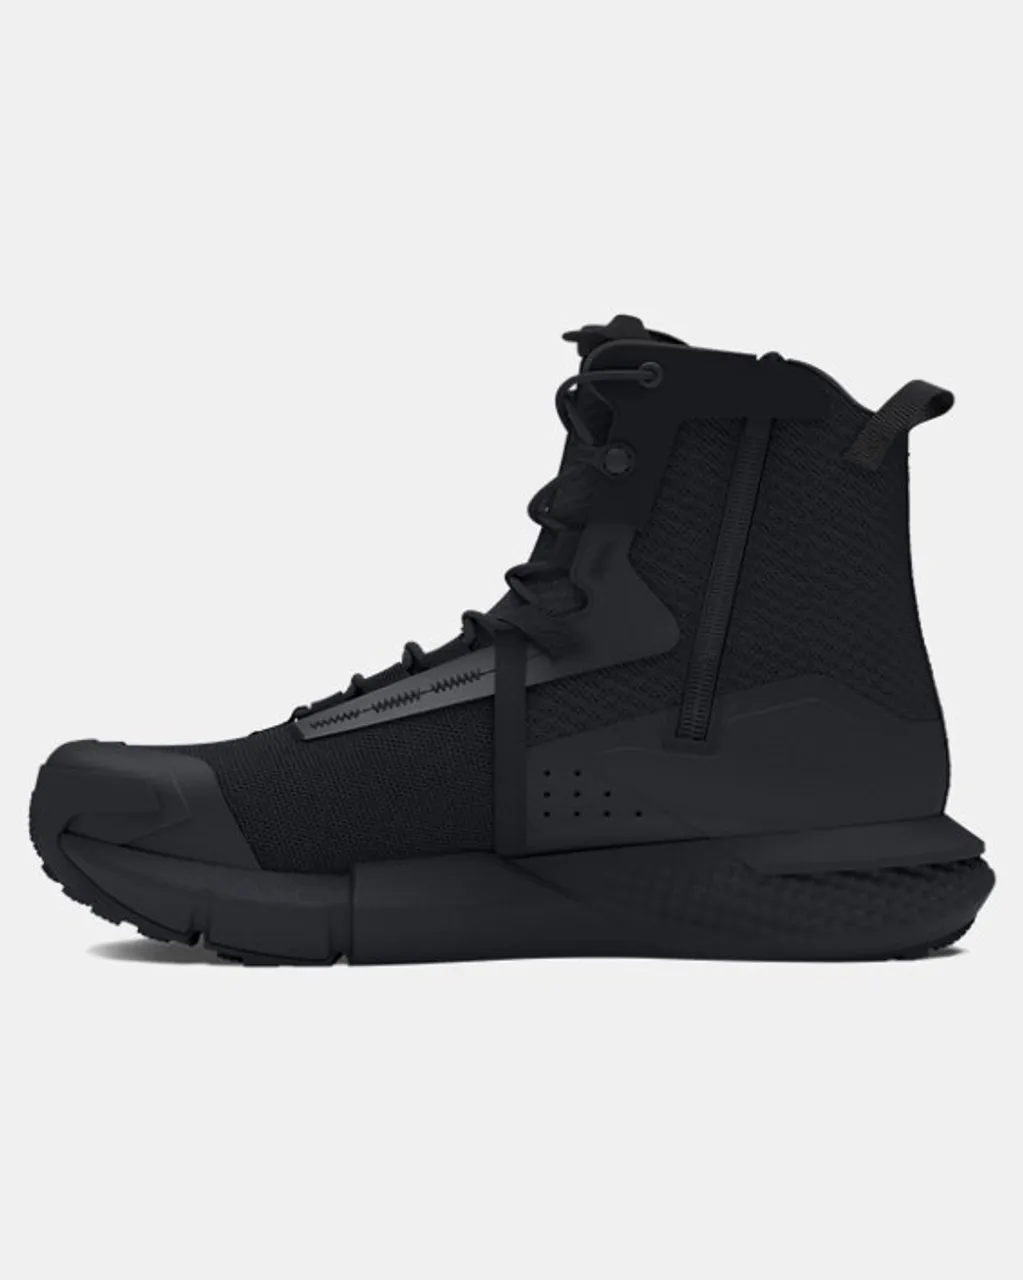 Men's  Under Armour  Valsetz Zip Tactical Boots Black / Black / Jet Gray